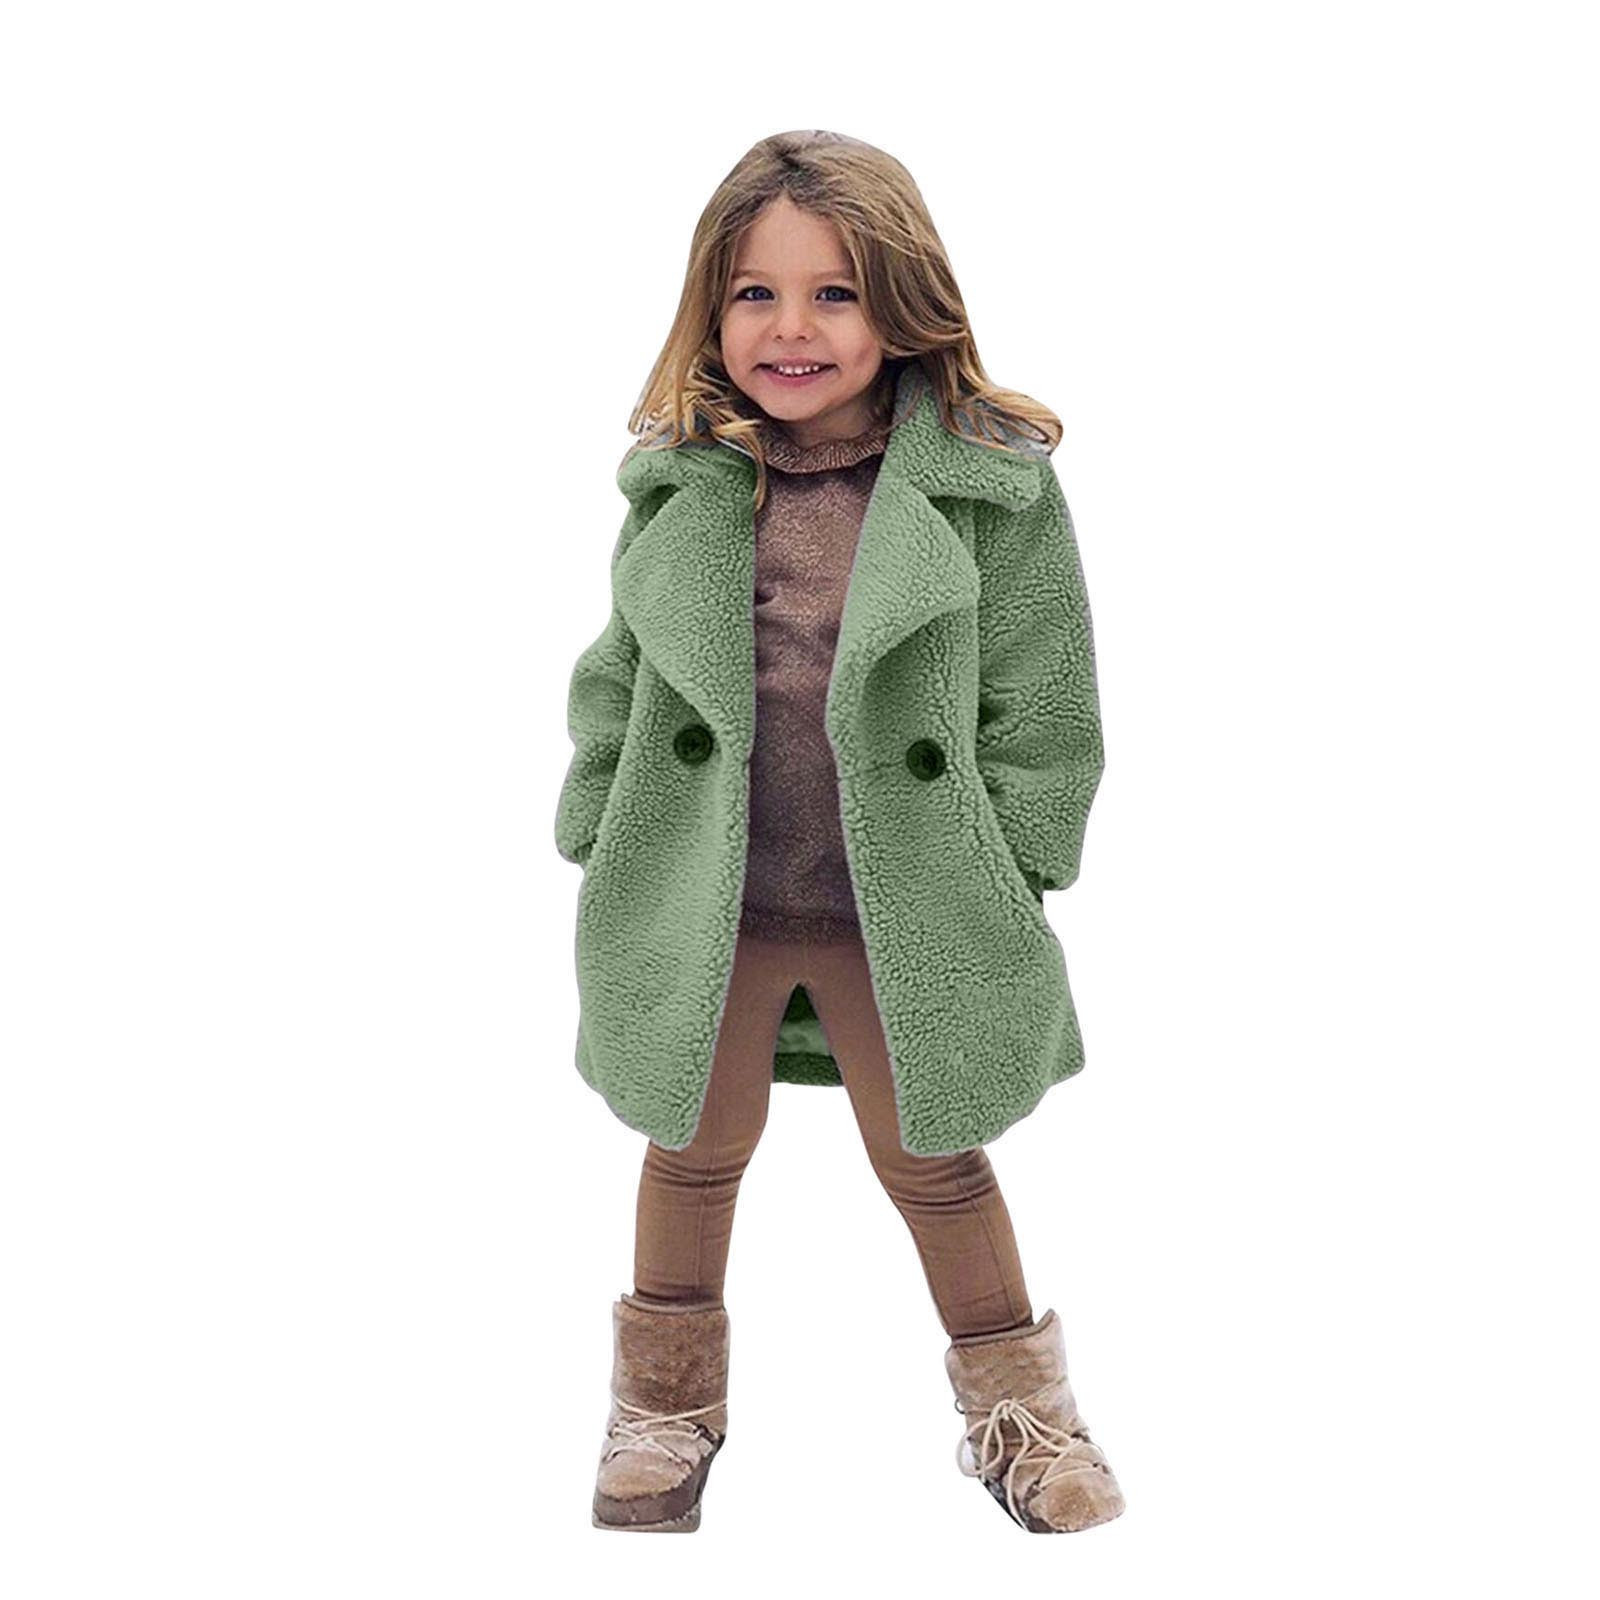 Winter Savings Clearance! Suokom Cute Toddler Kids Girls Fleece Jacket Coat Fall Winter Warm Coat Outerwear Jacket, Baby Sweater Girls' Outerwear Jackets & Coats Green - image 1 of 5